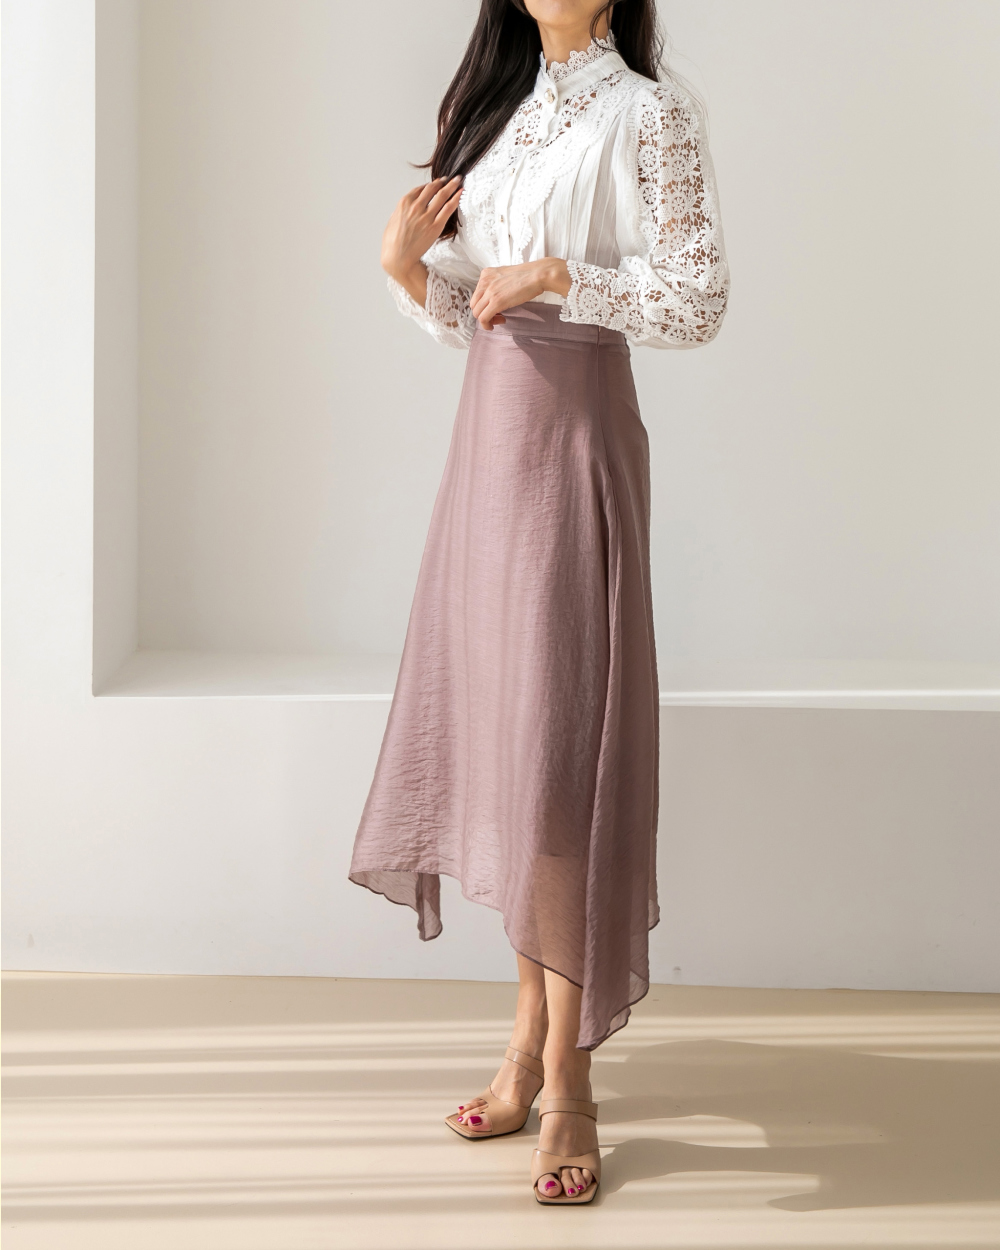 blouse model image-S1L36